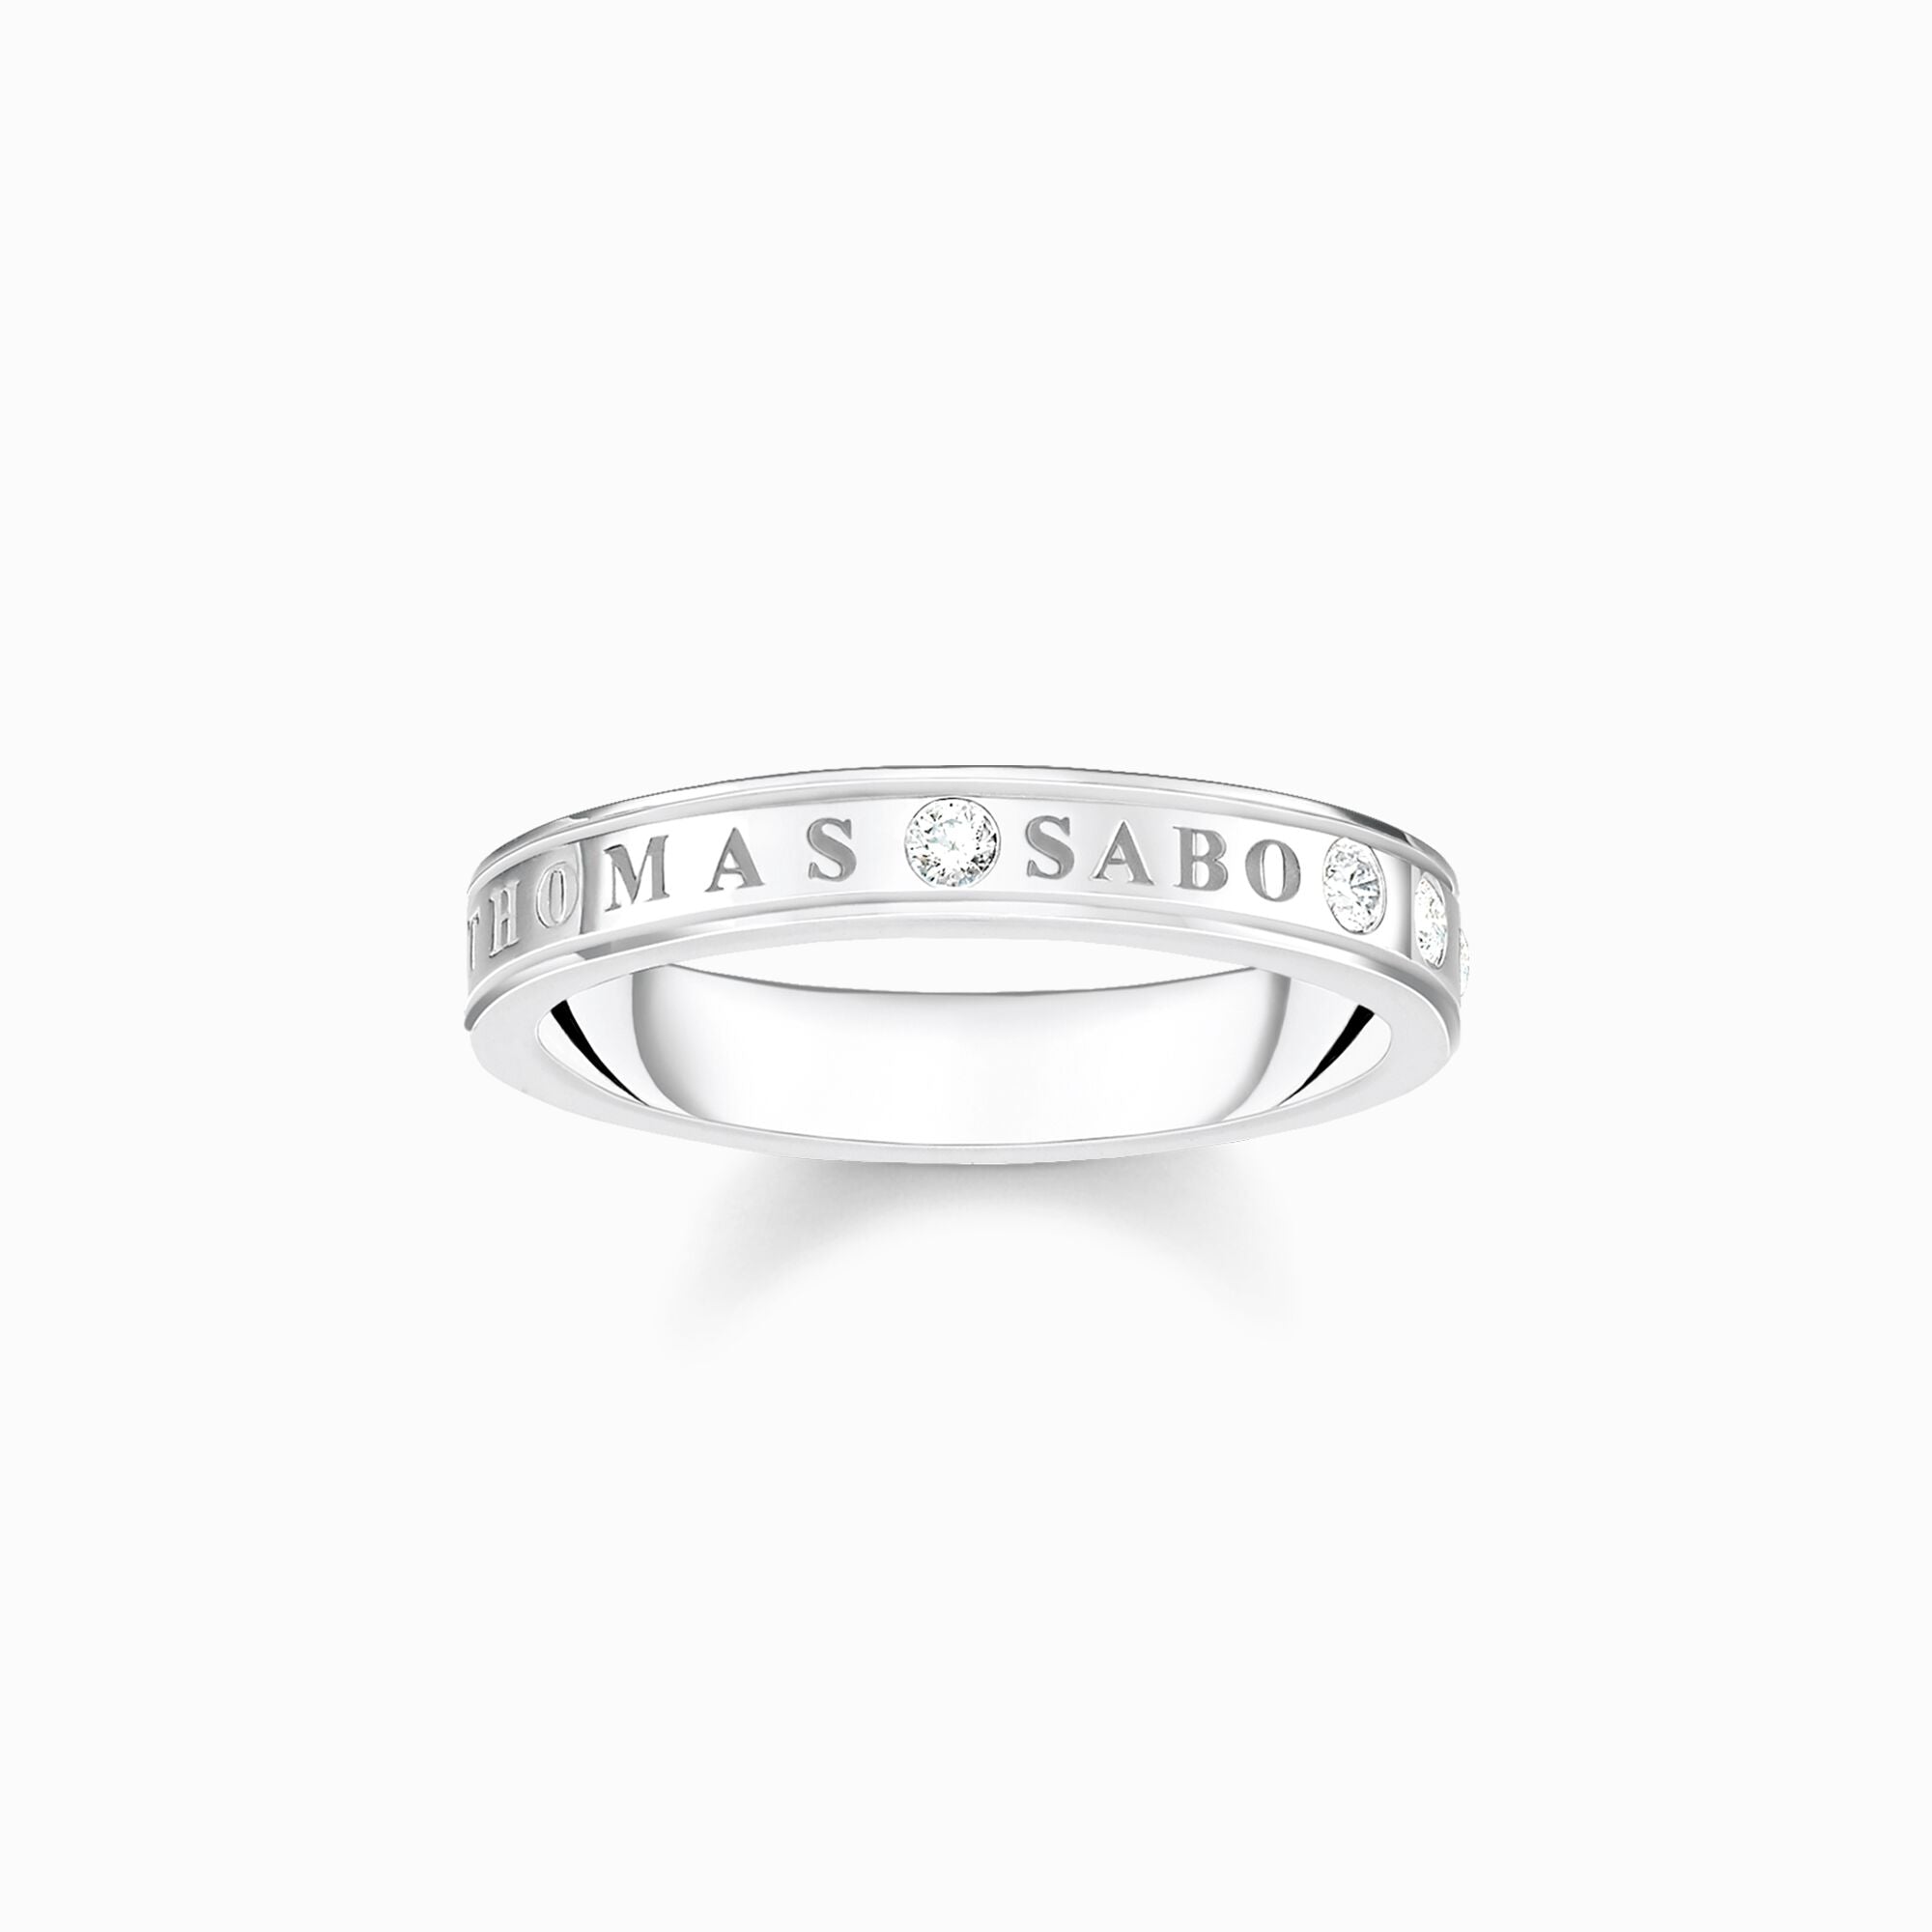 Thomas Sabo Sterling Silver White Stones Ring